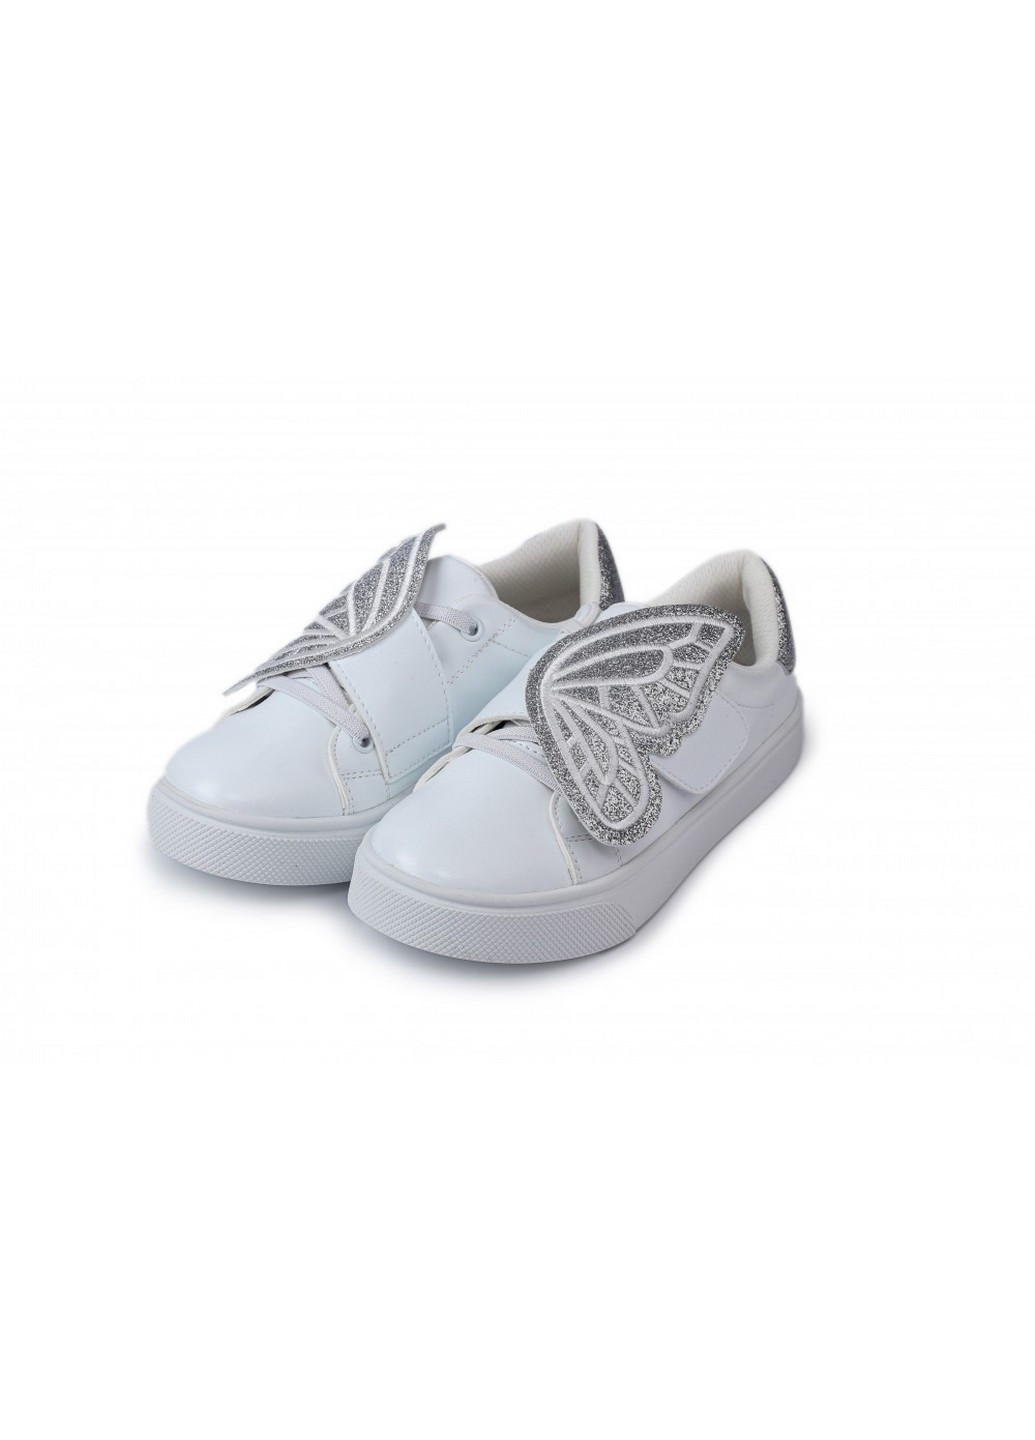 Белые кроссовки 202001awhite-silver 26 бело-серебристый (2000903194354) Erra